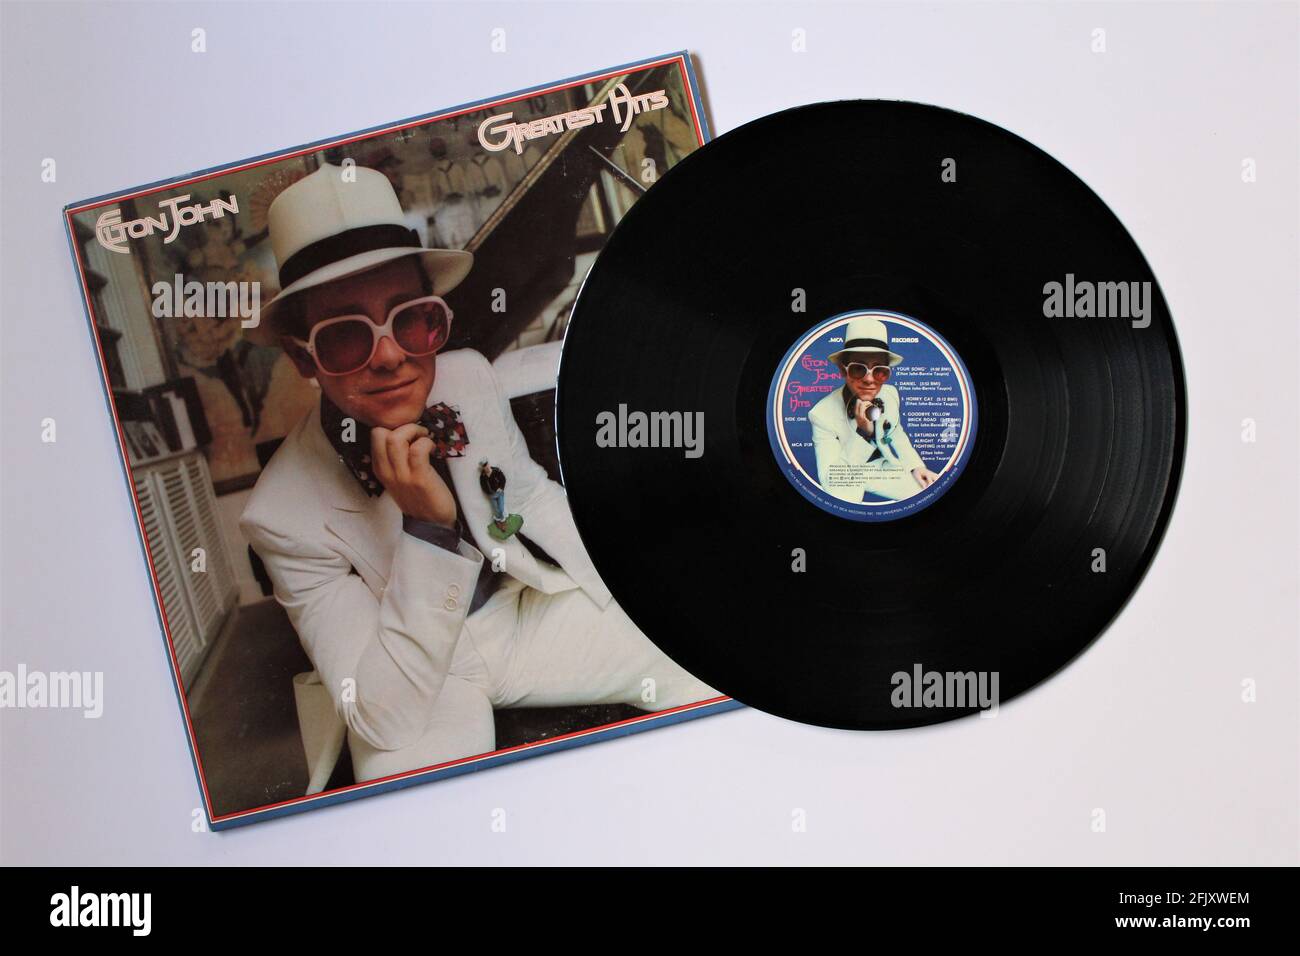 Pop and rock artist, Elton John music album on vinyl record LP disc. Titled: Greatest Hits Stock Photo